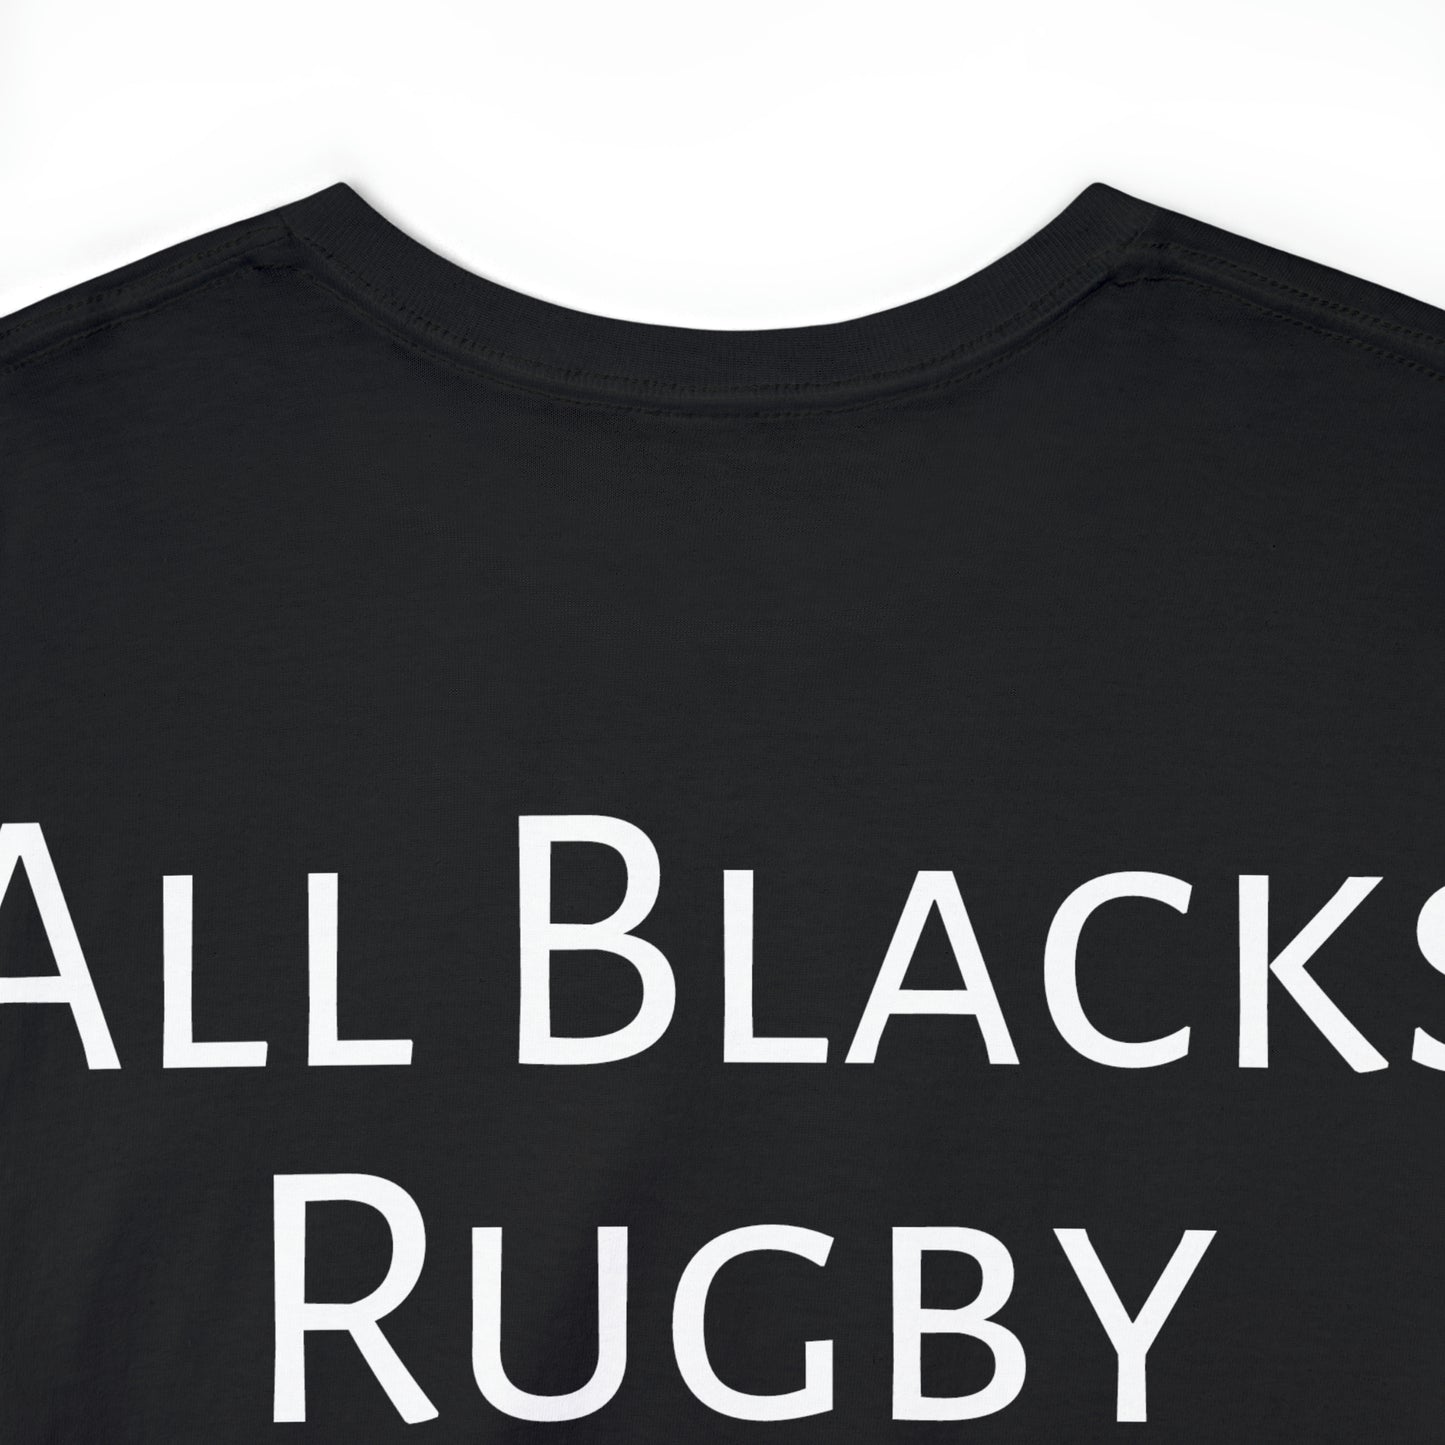 All Blacks World Cup Winners - black shirt